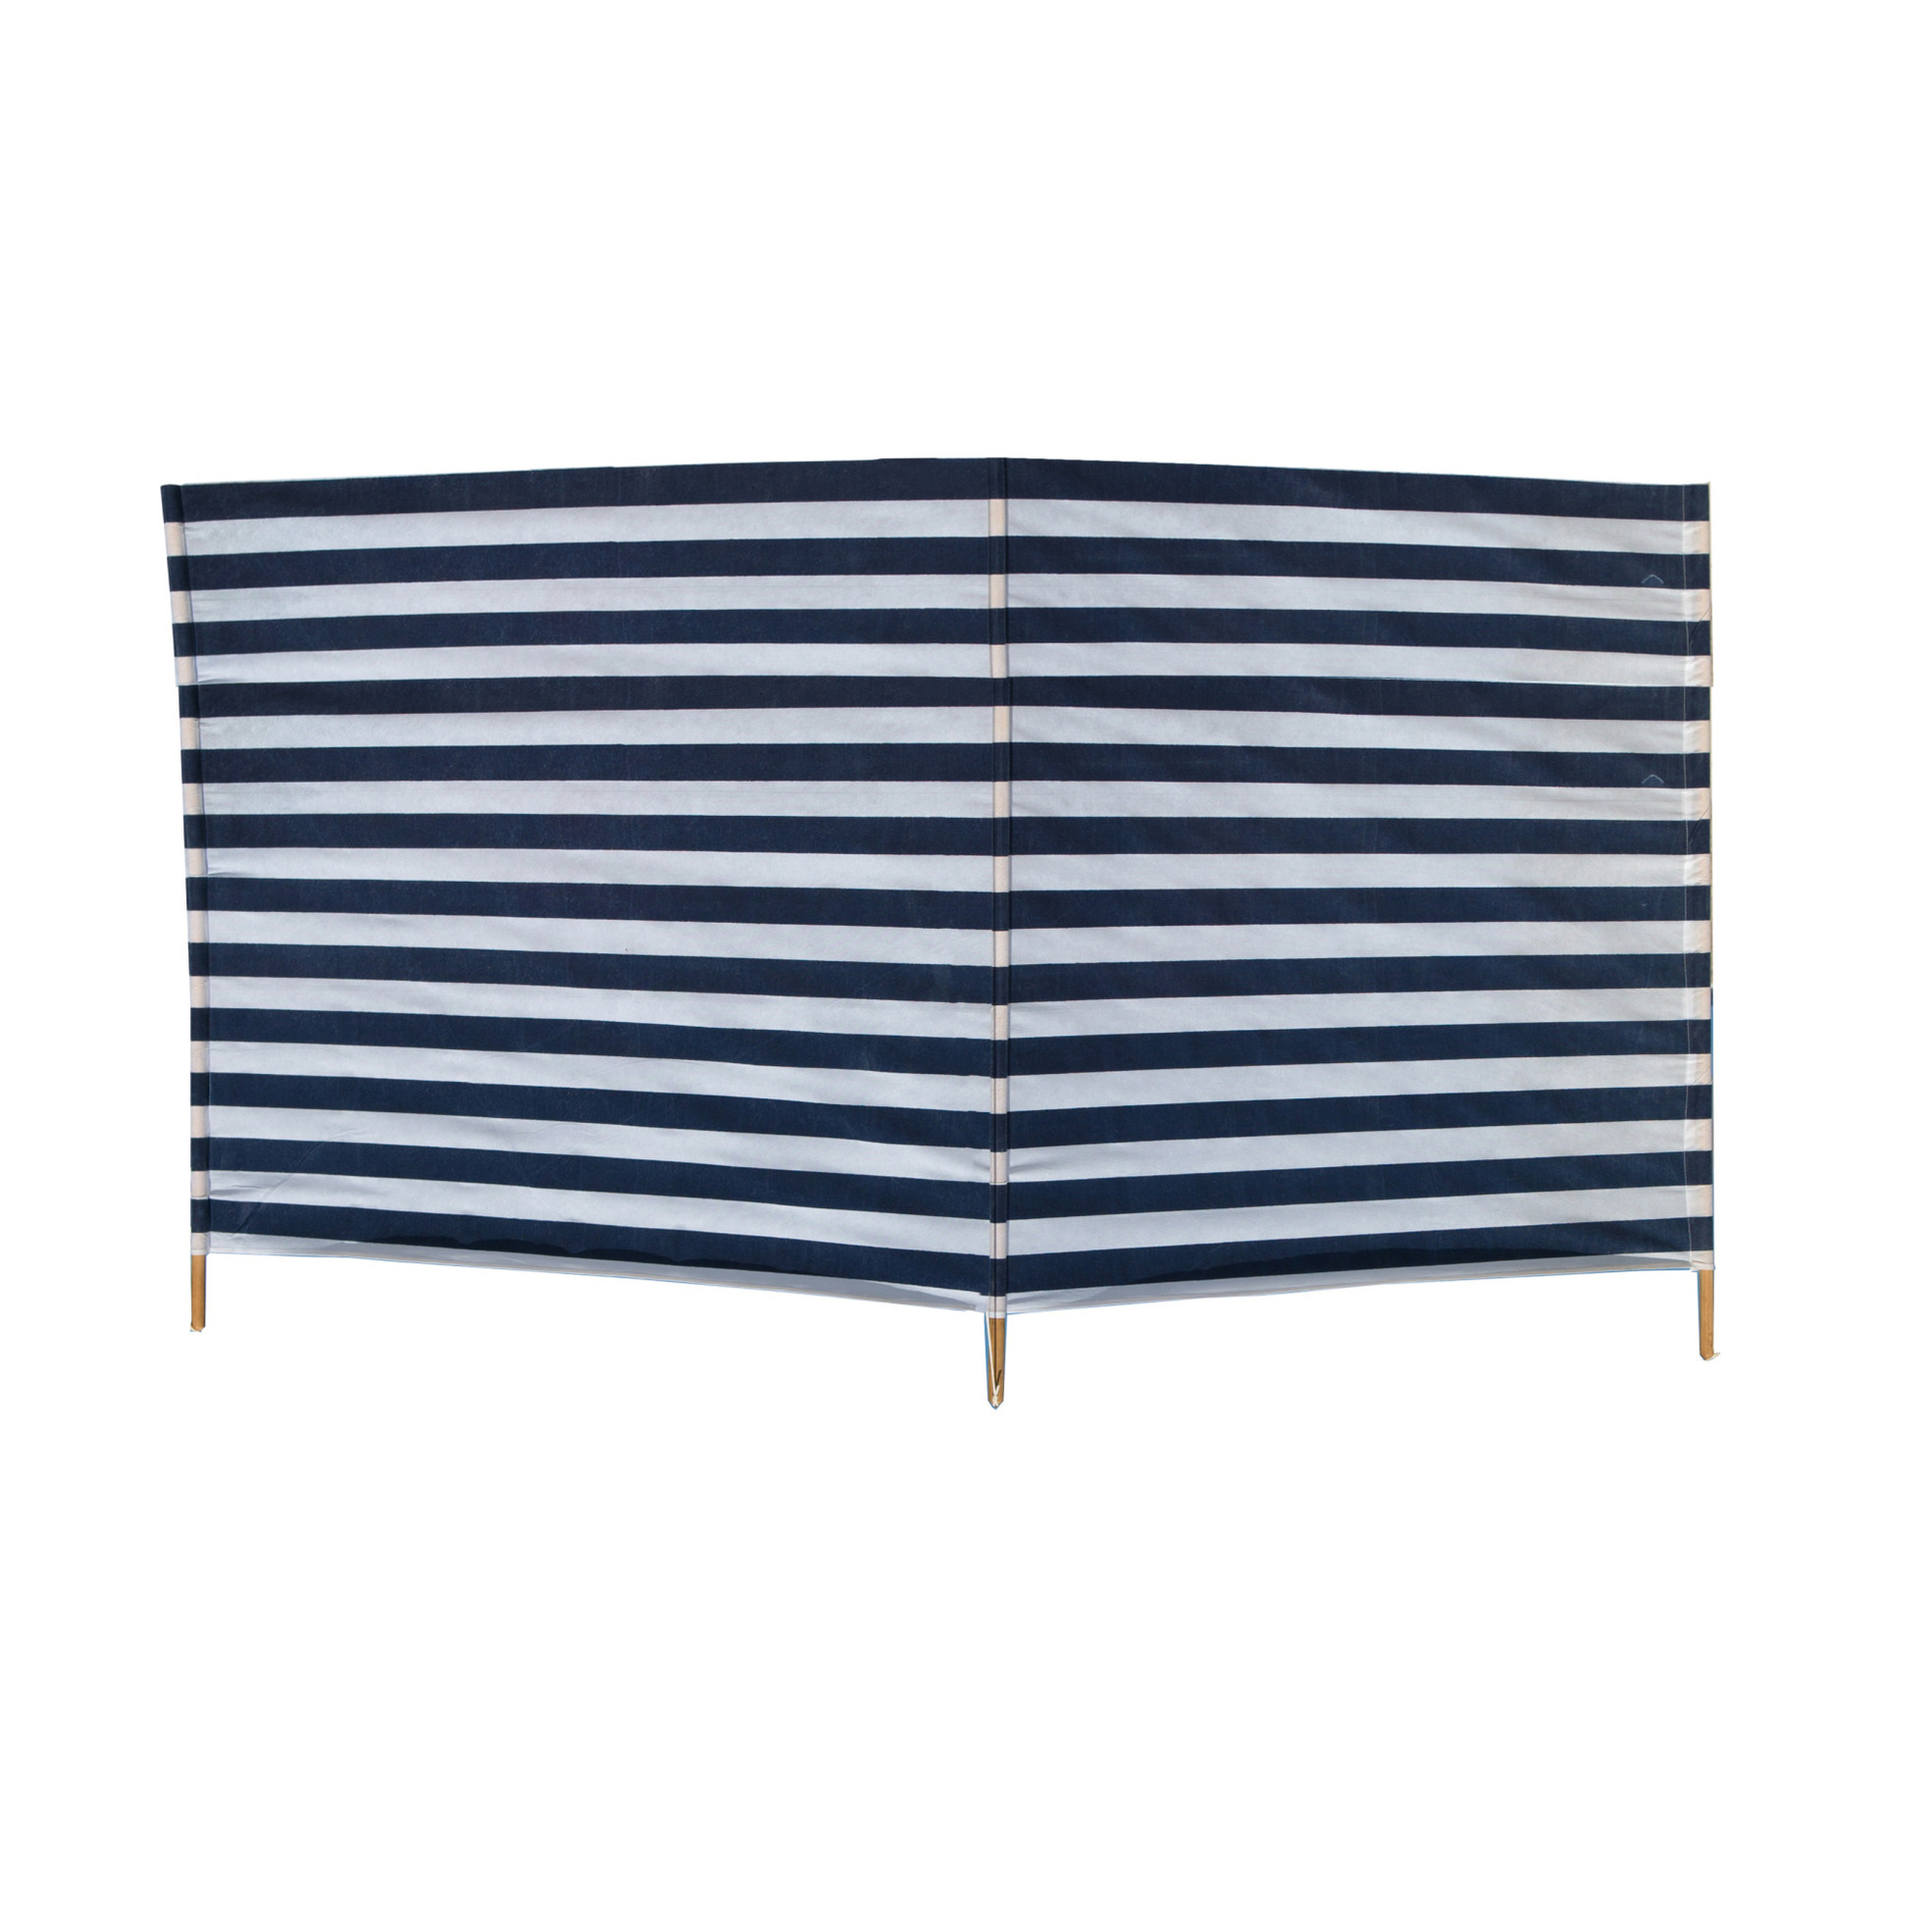 Strand-camping windscherm gestreept wit-donkerblauw 240 cm x 120 cm